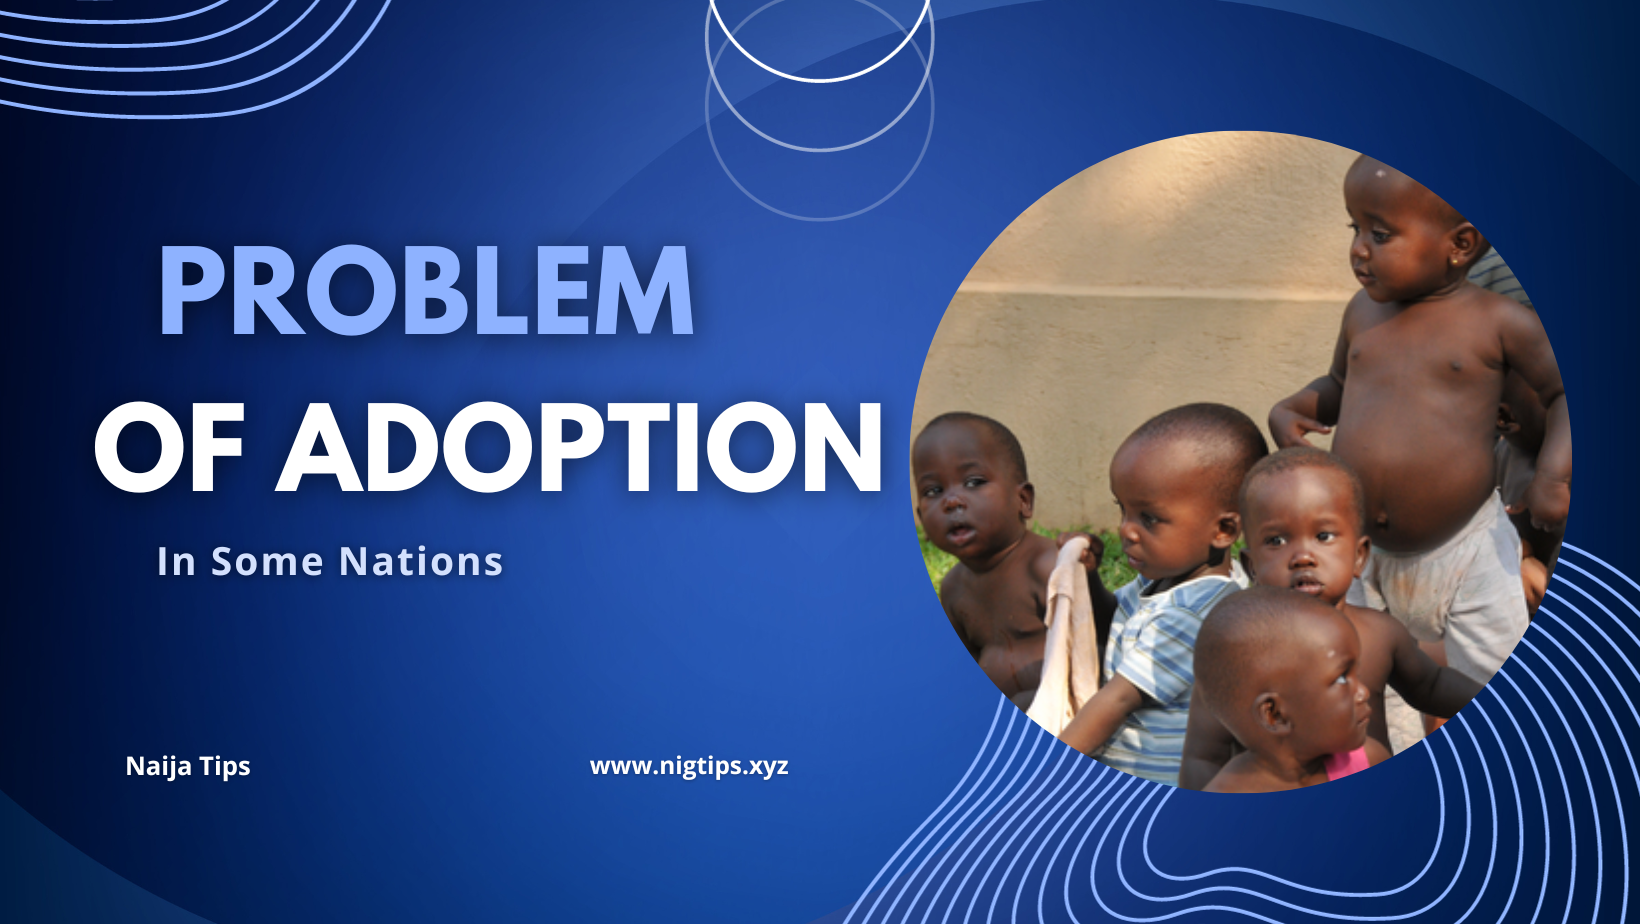 The Problem of Adoption